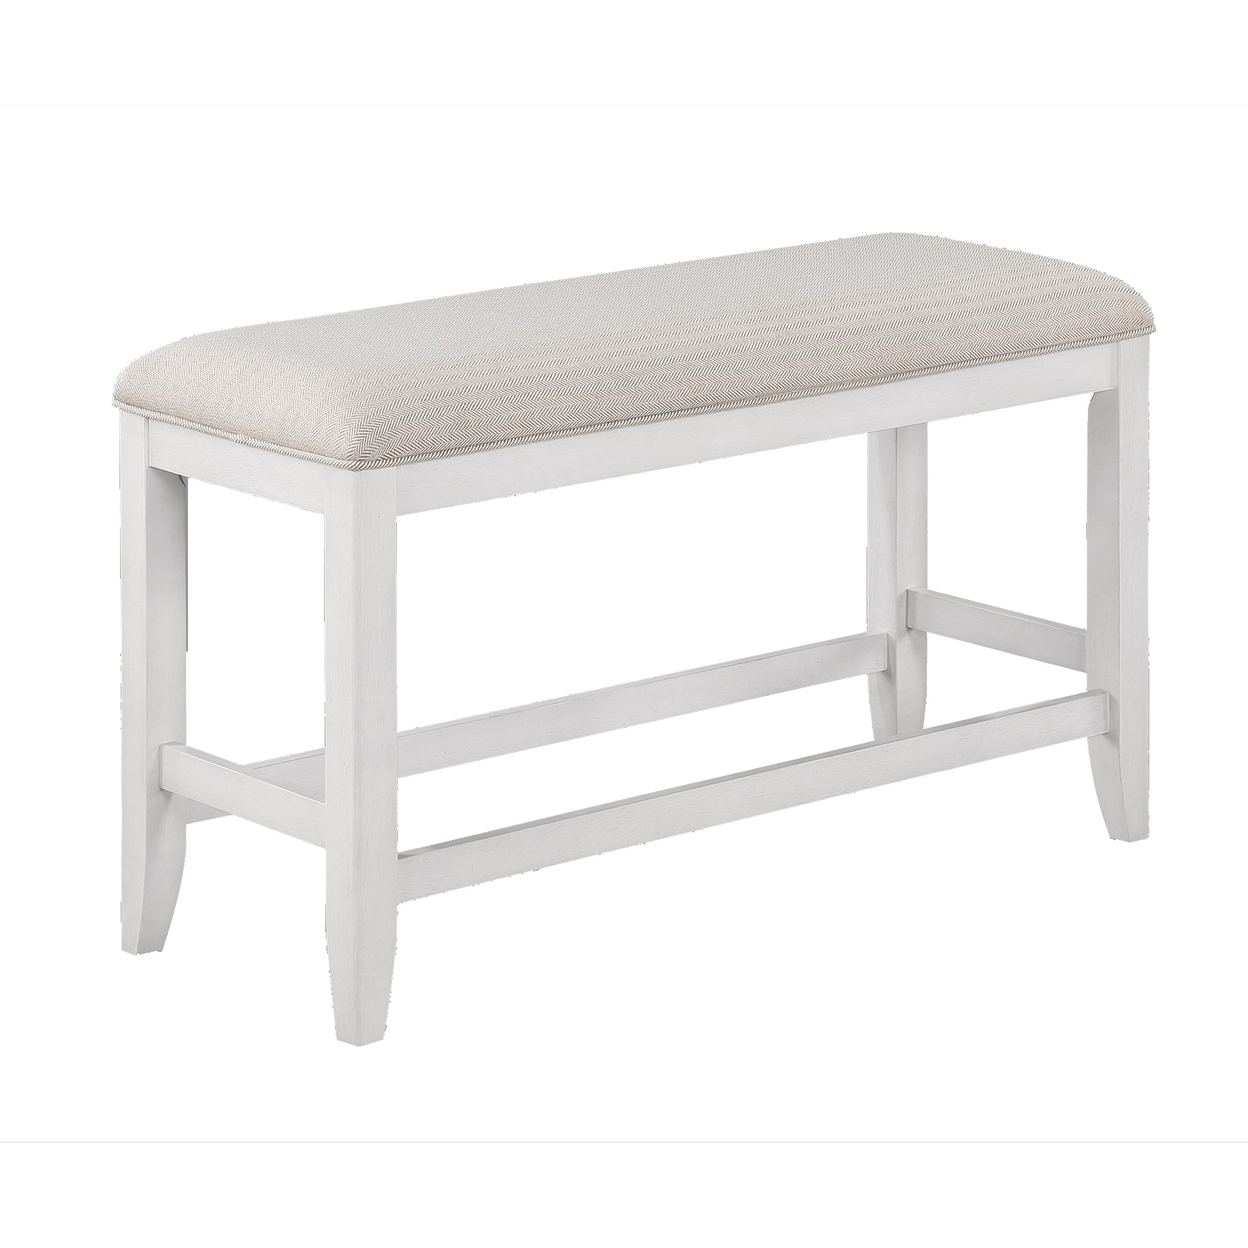 Kith 42 Inch Counter Height Dining Bench, Seat Cushion, Beige Fabric, White- Saltoro Sherpi